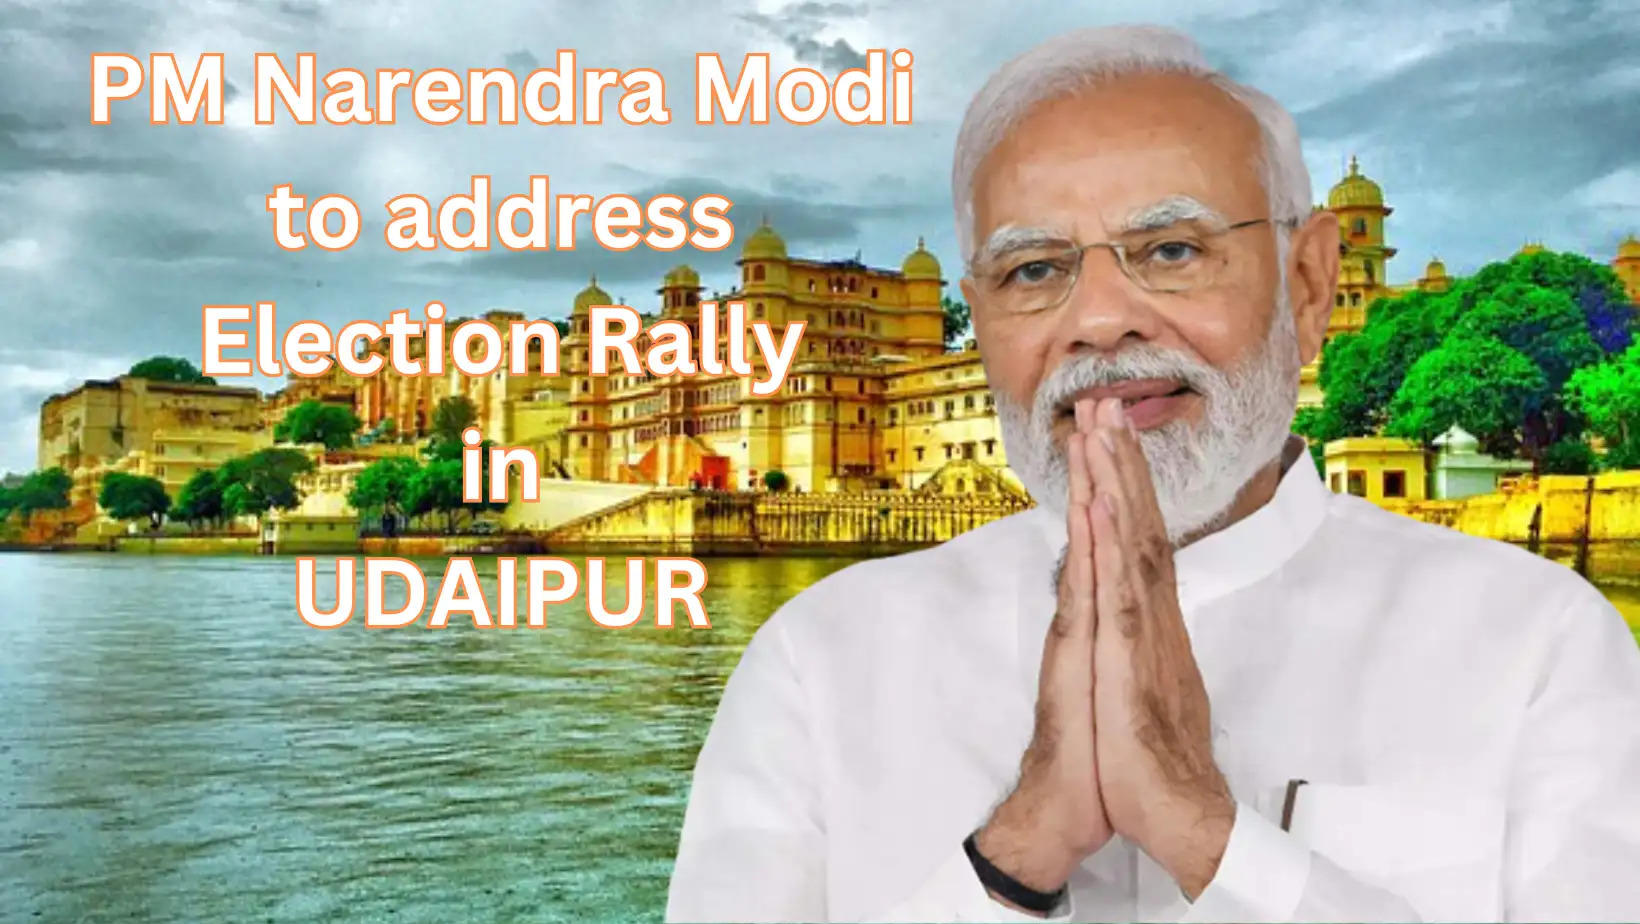 Prime Minister Narendra Modi to address election rally in udaipur on 9 november